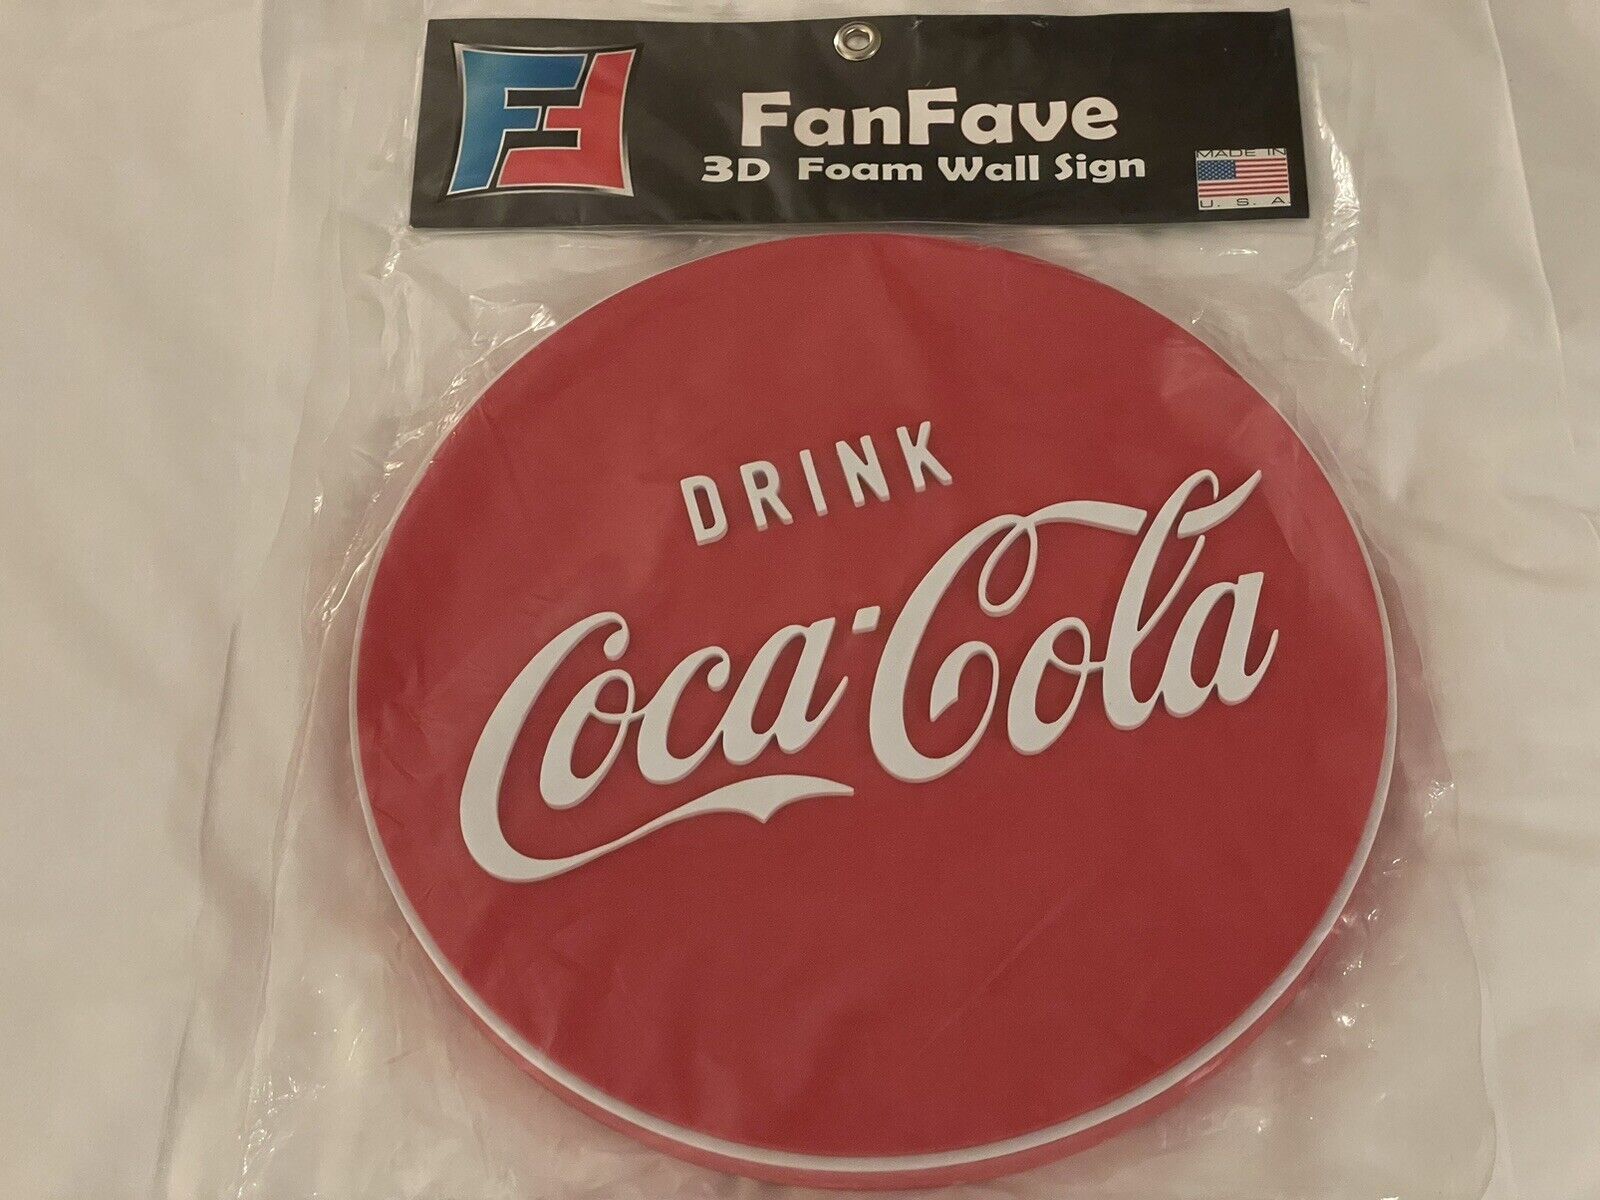 VINTAGE Coca-Cola Logo Art Fanfave FanFoam 3D Foam Wall Sign LARGE 14.5x14.5 NEW